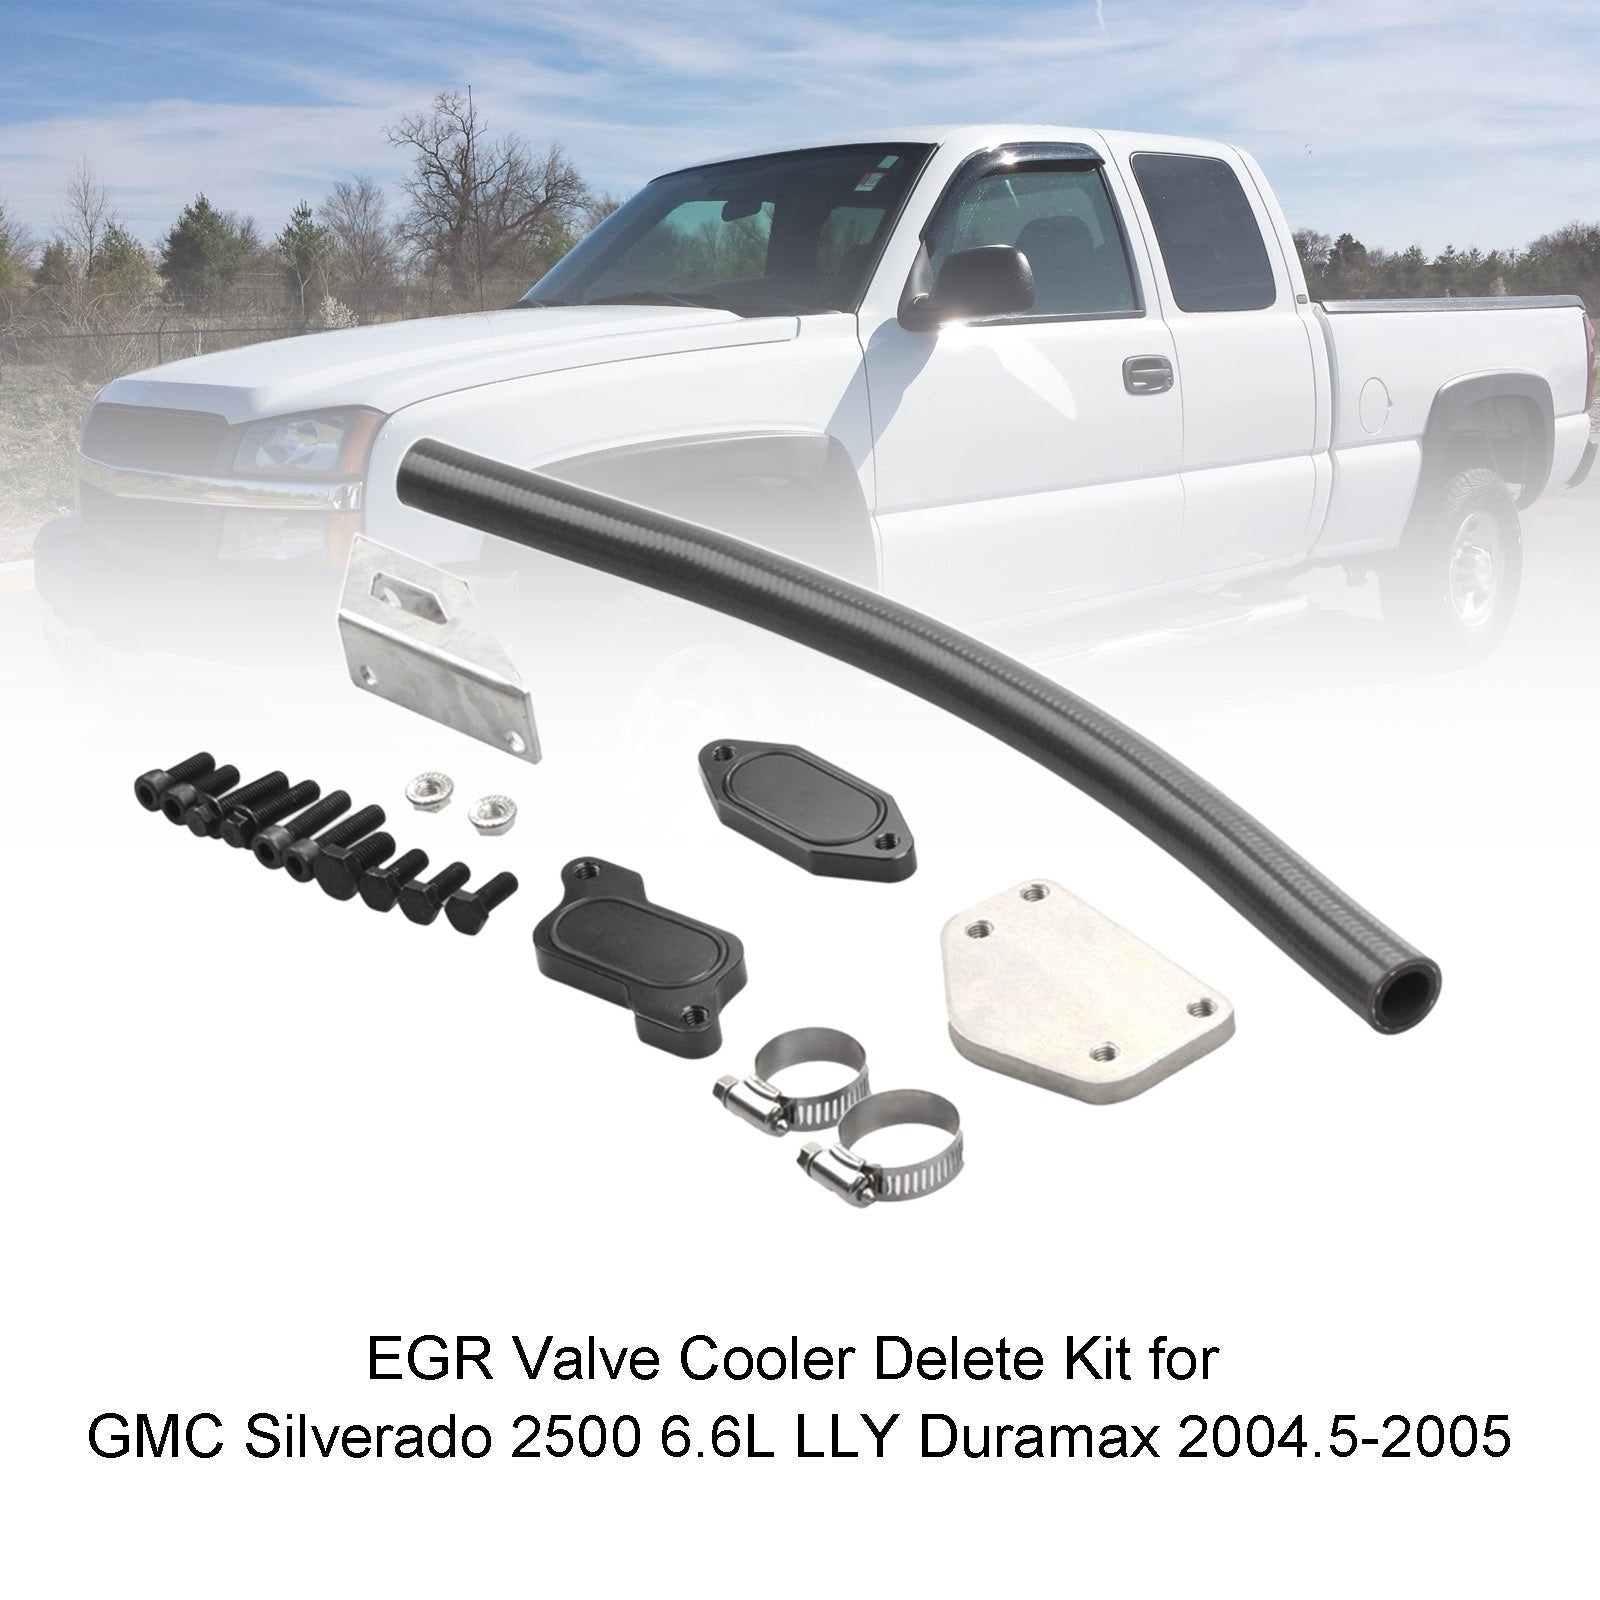 Chevrolet GMC 2004.5-2005 Silverado 2500 6.6L LLY Duramax EGR Valve Cooler Delete Kit